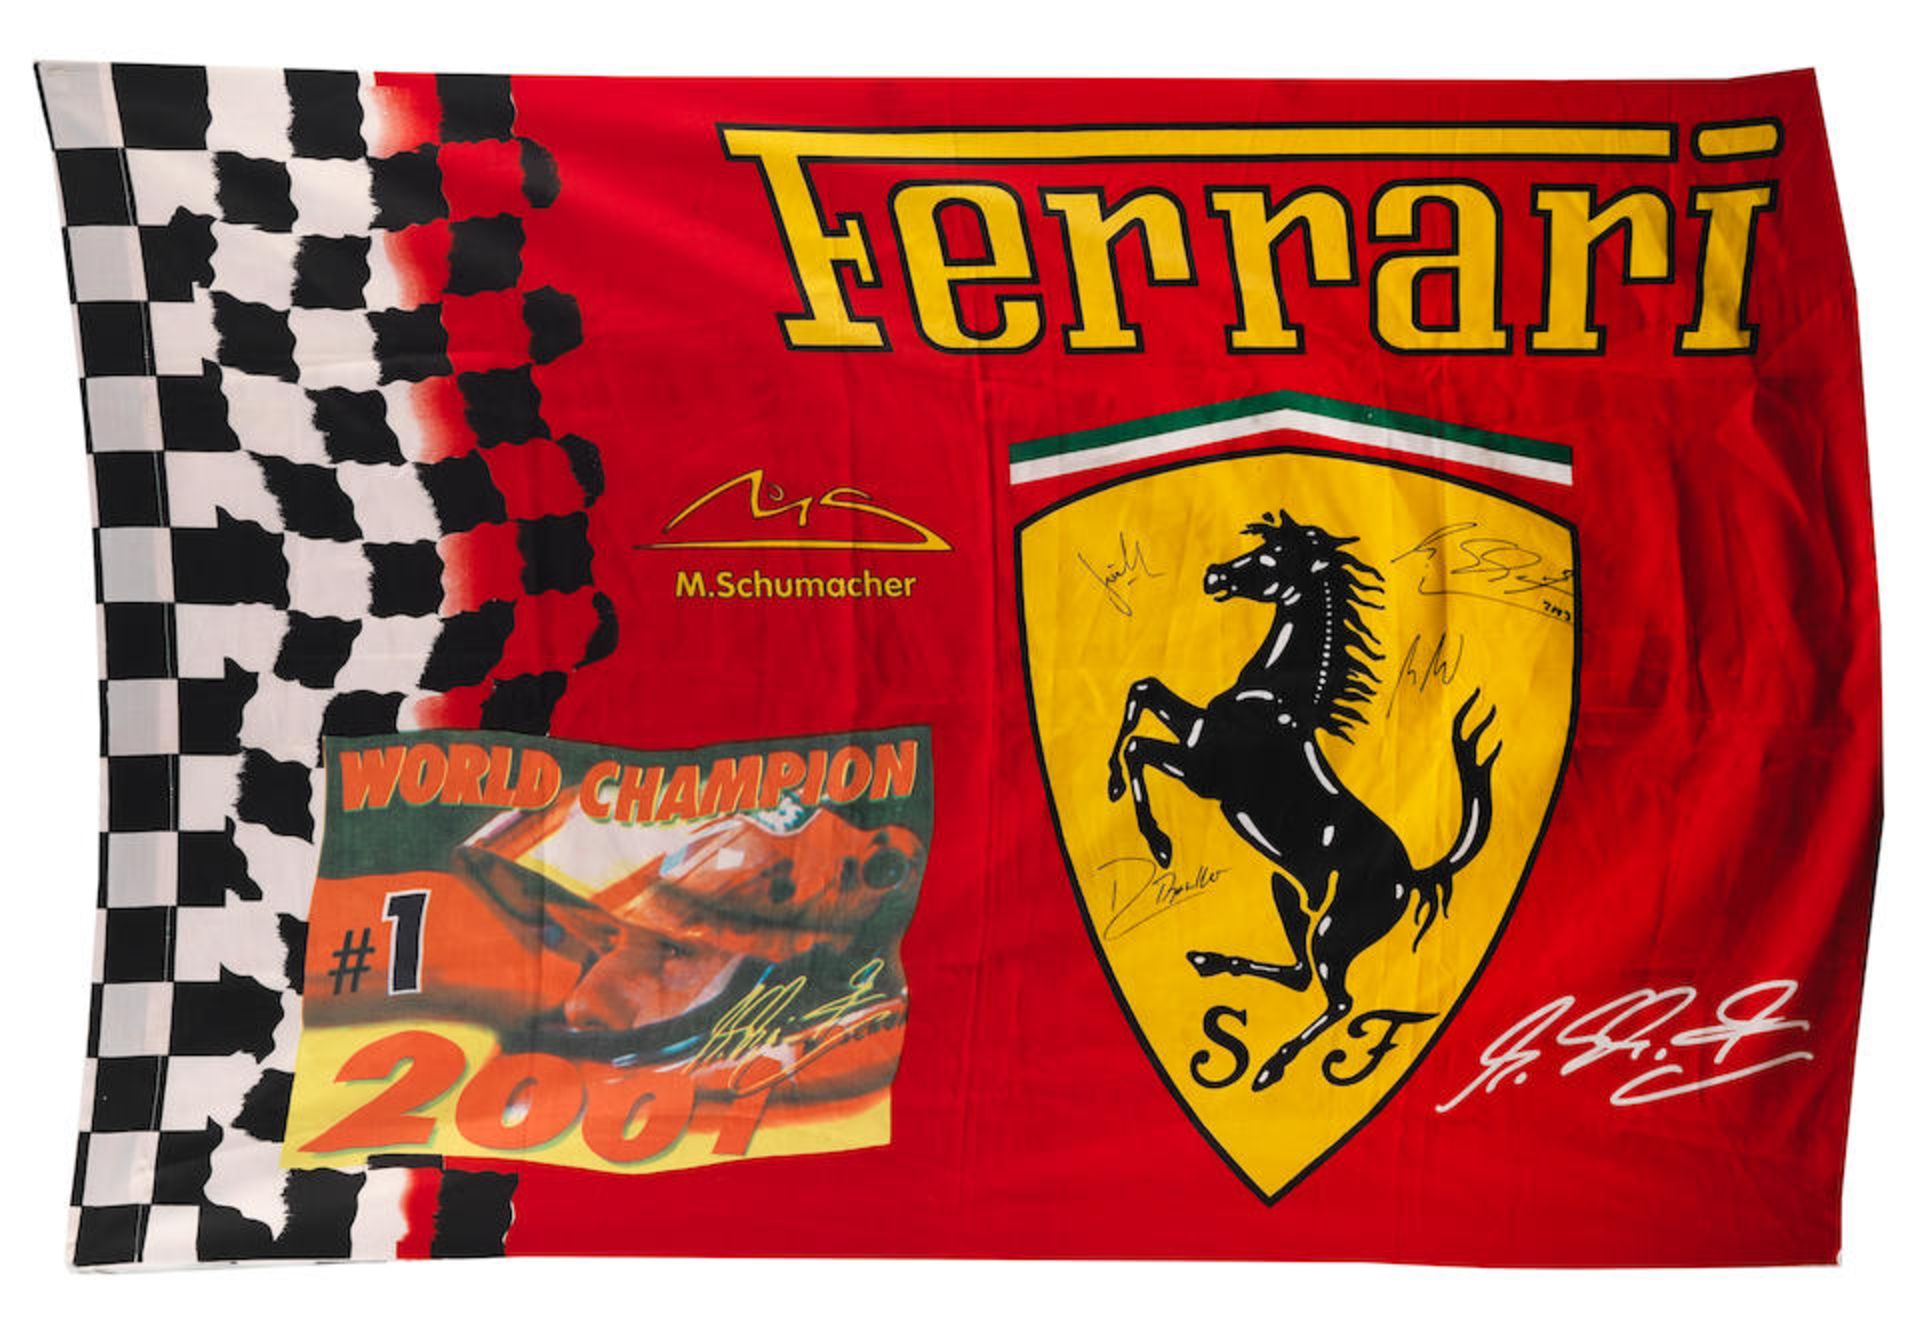 A signed Ferrari supporters flag,